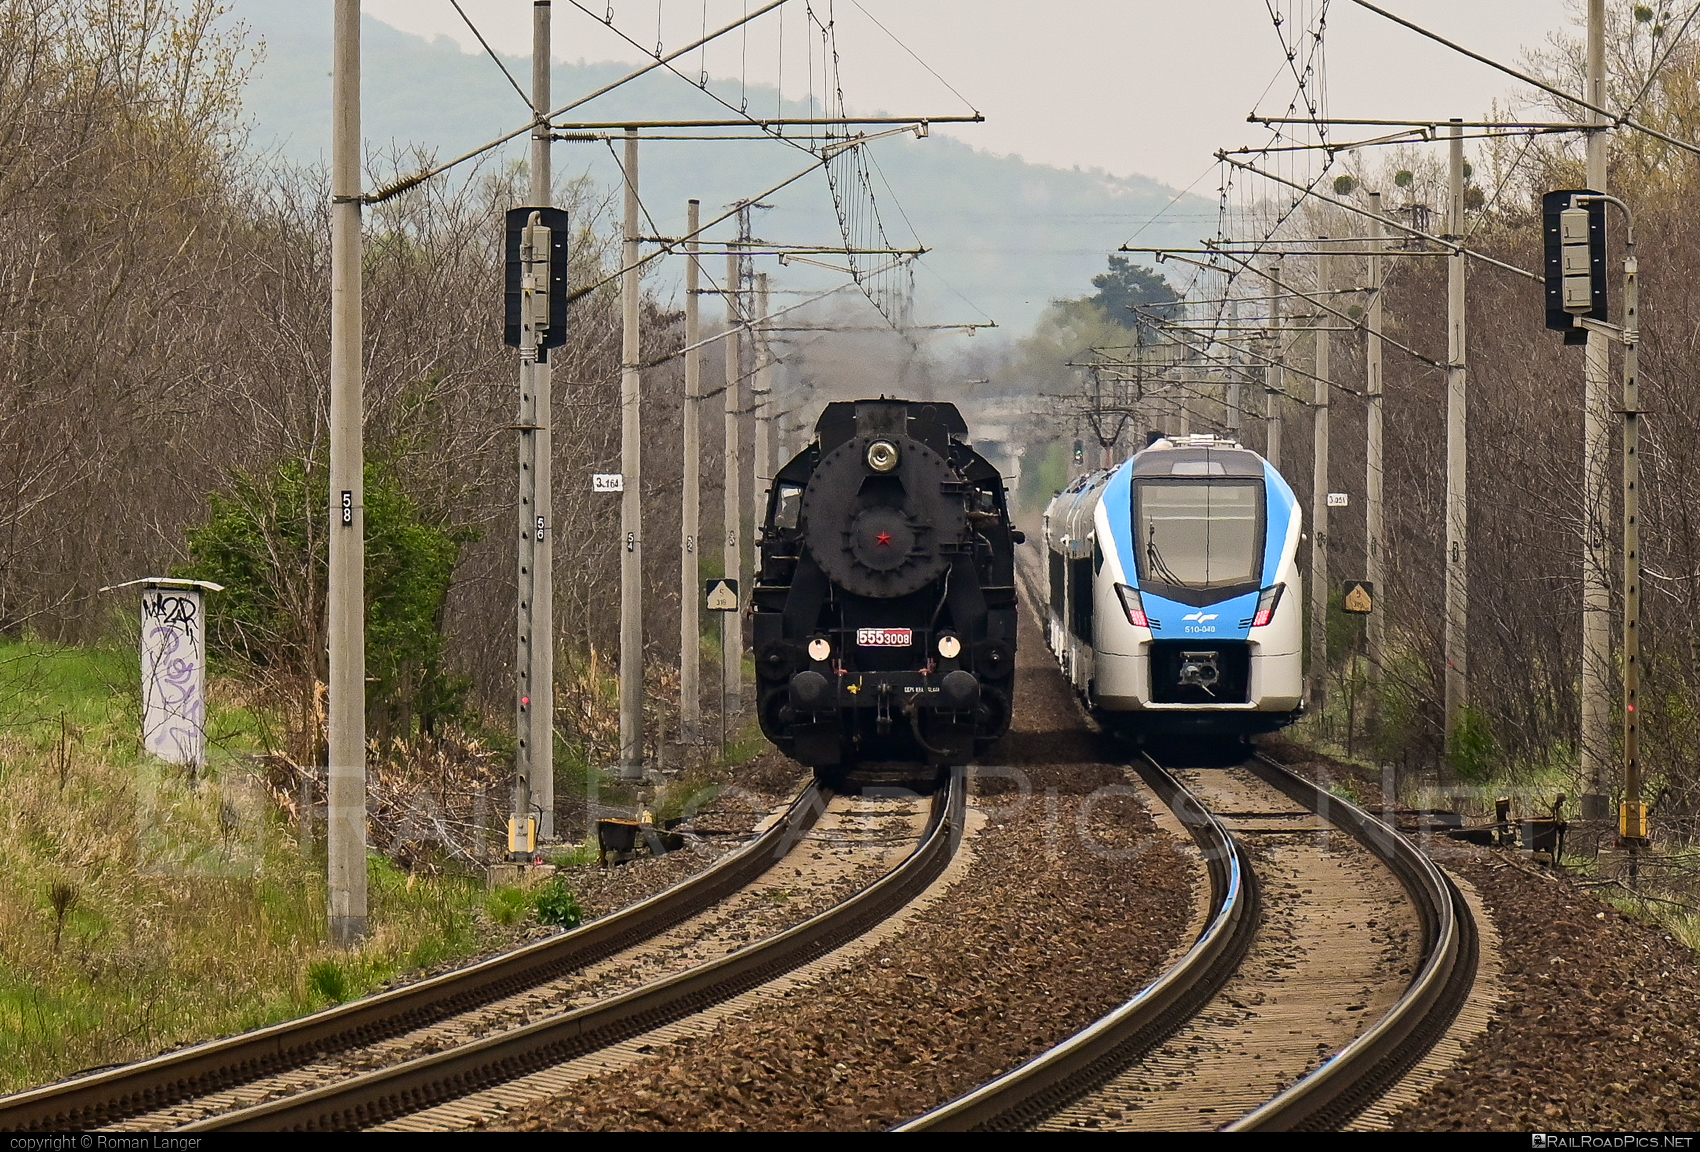 Škoda Class 555.3 - 555.3008 operated by Železnice Slovenskej Republiky #csd #locomotive5553 #skoda #skodaClass5553 #zelezniceslovenskejrepubliky #zsr